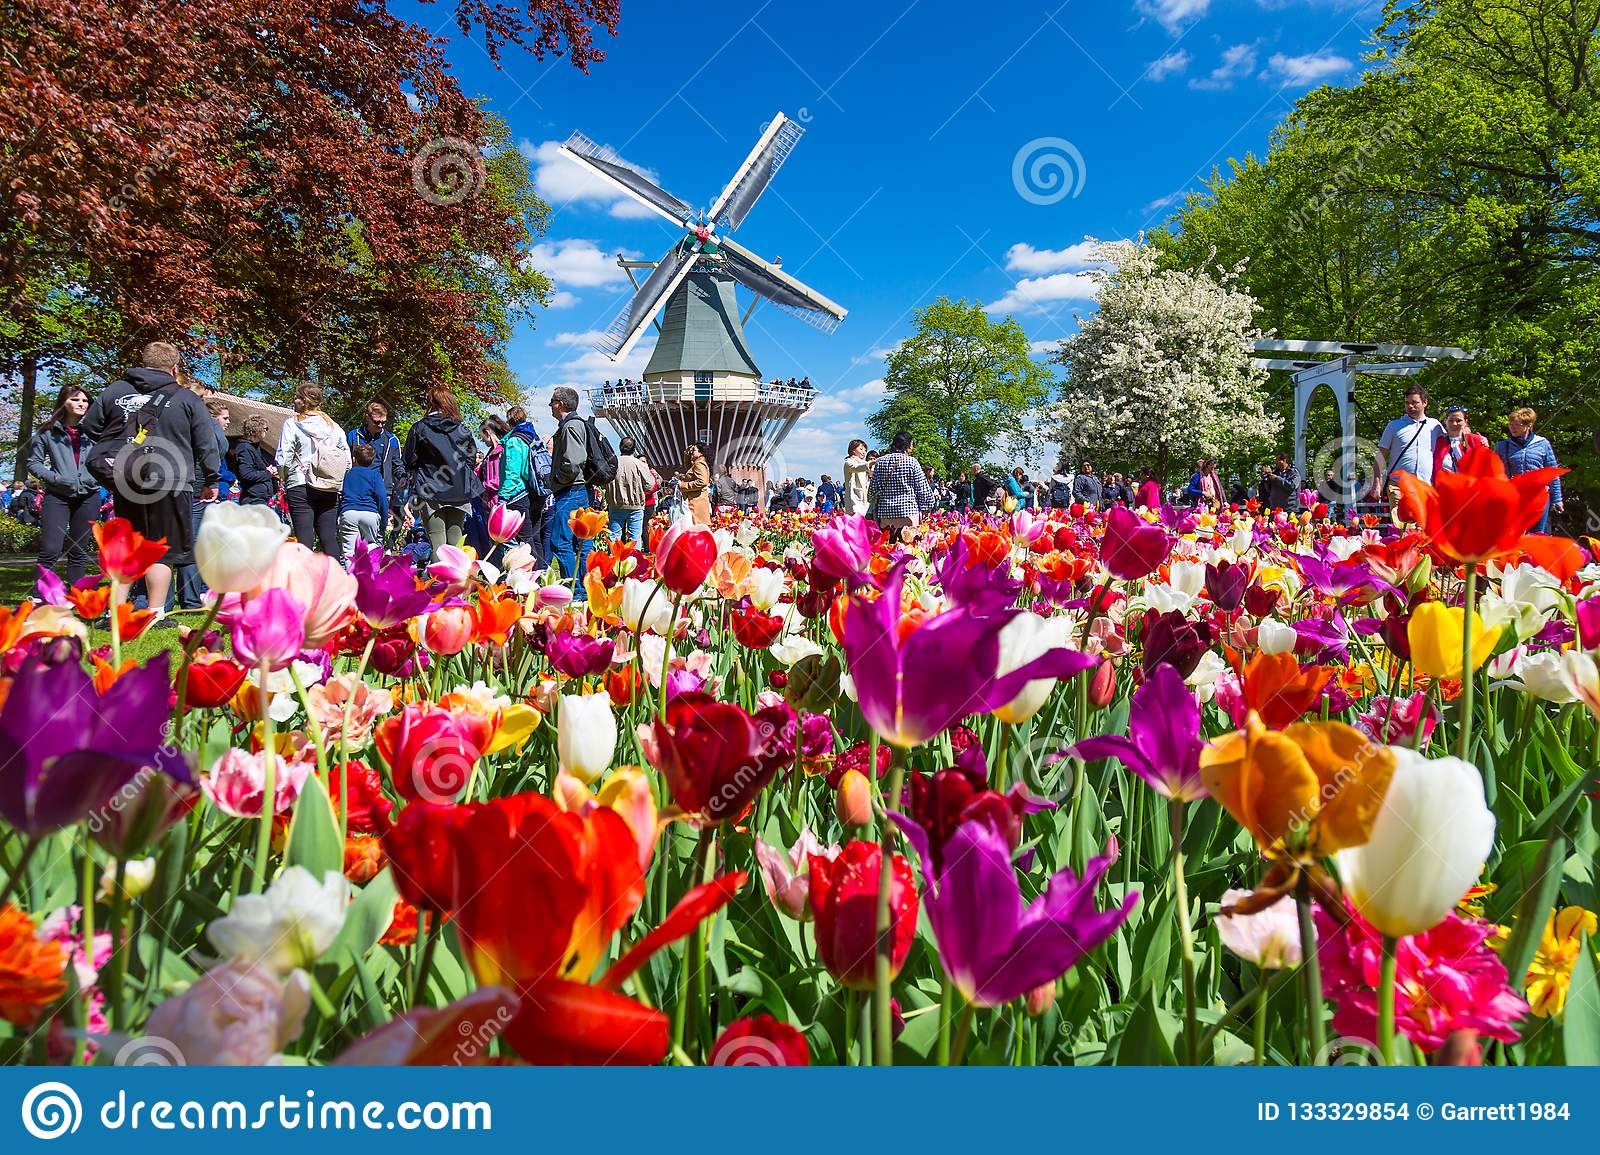 keukenhof netherlands may blooming colorful tulips flowerbed public flower garden keukenhof windmill keukenhof